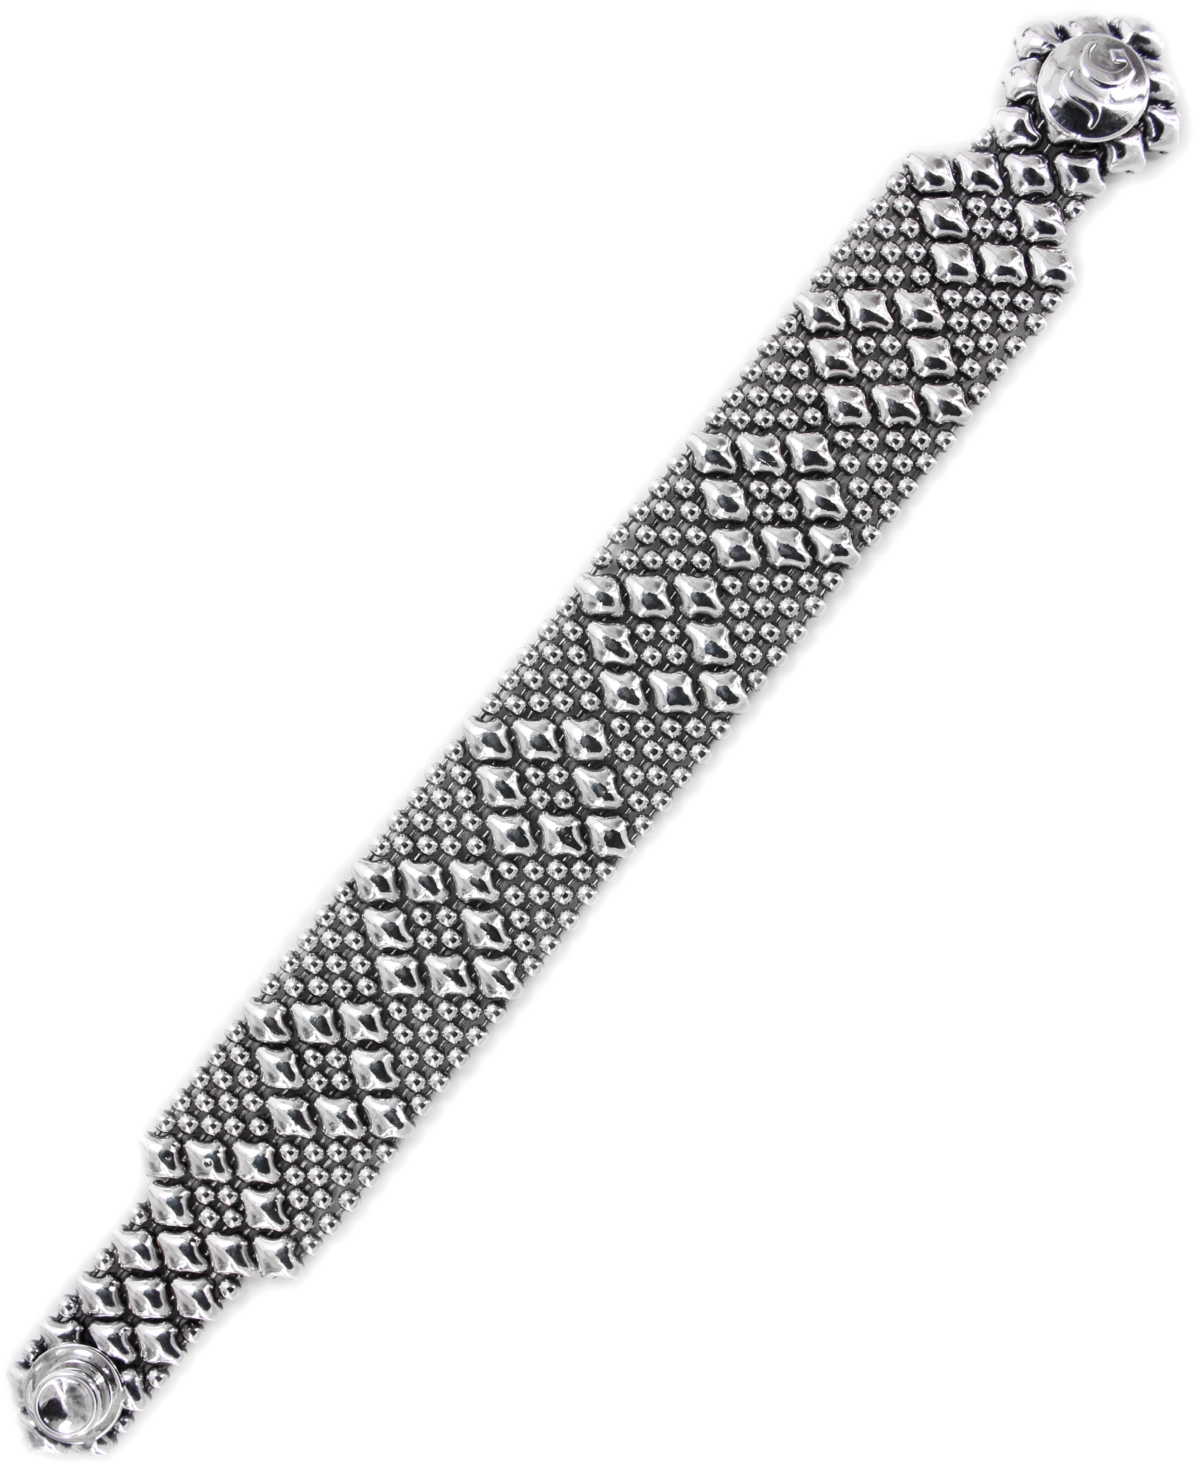 B4 Silver Mesh Bracelet in 7", 7 1/2" or 8" - Silver